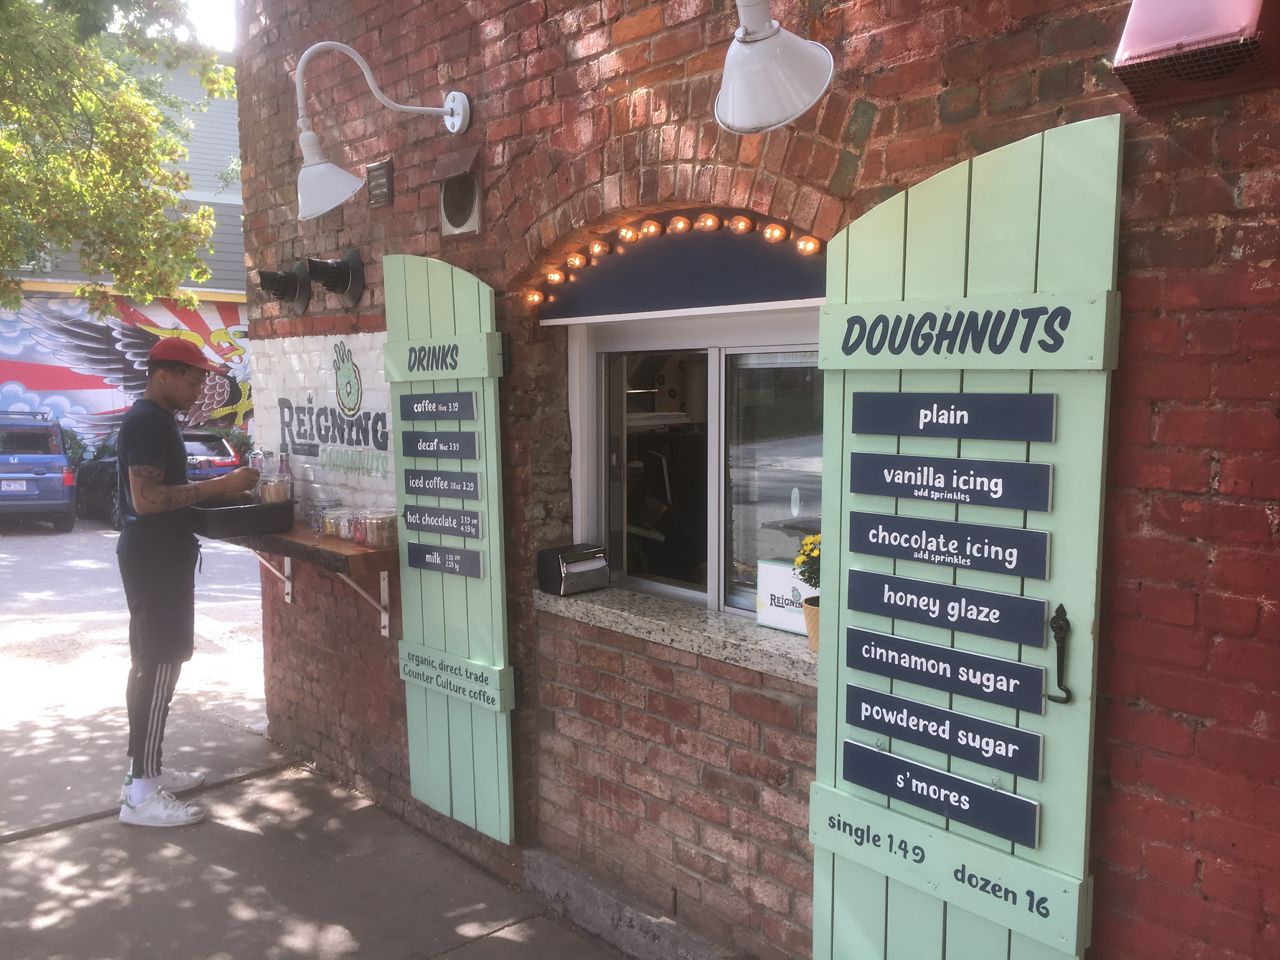 Reigning Doughnuts